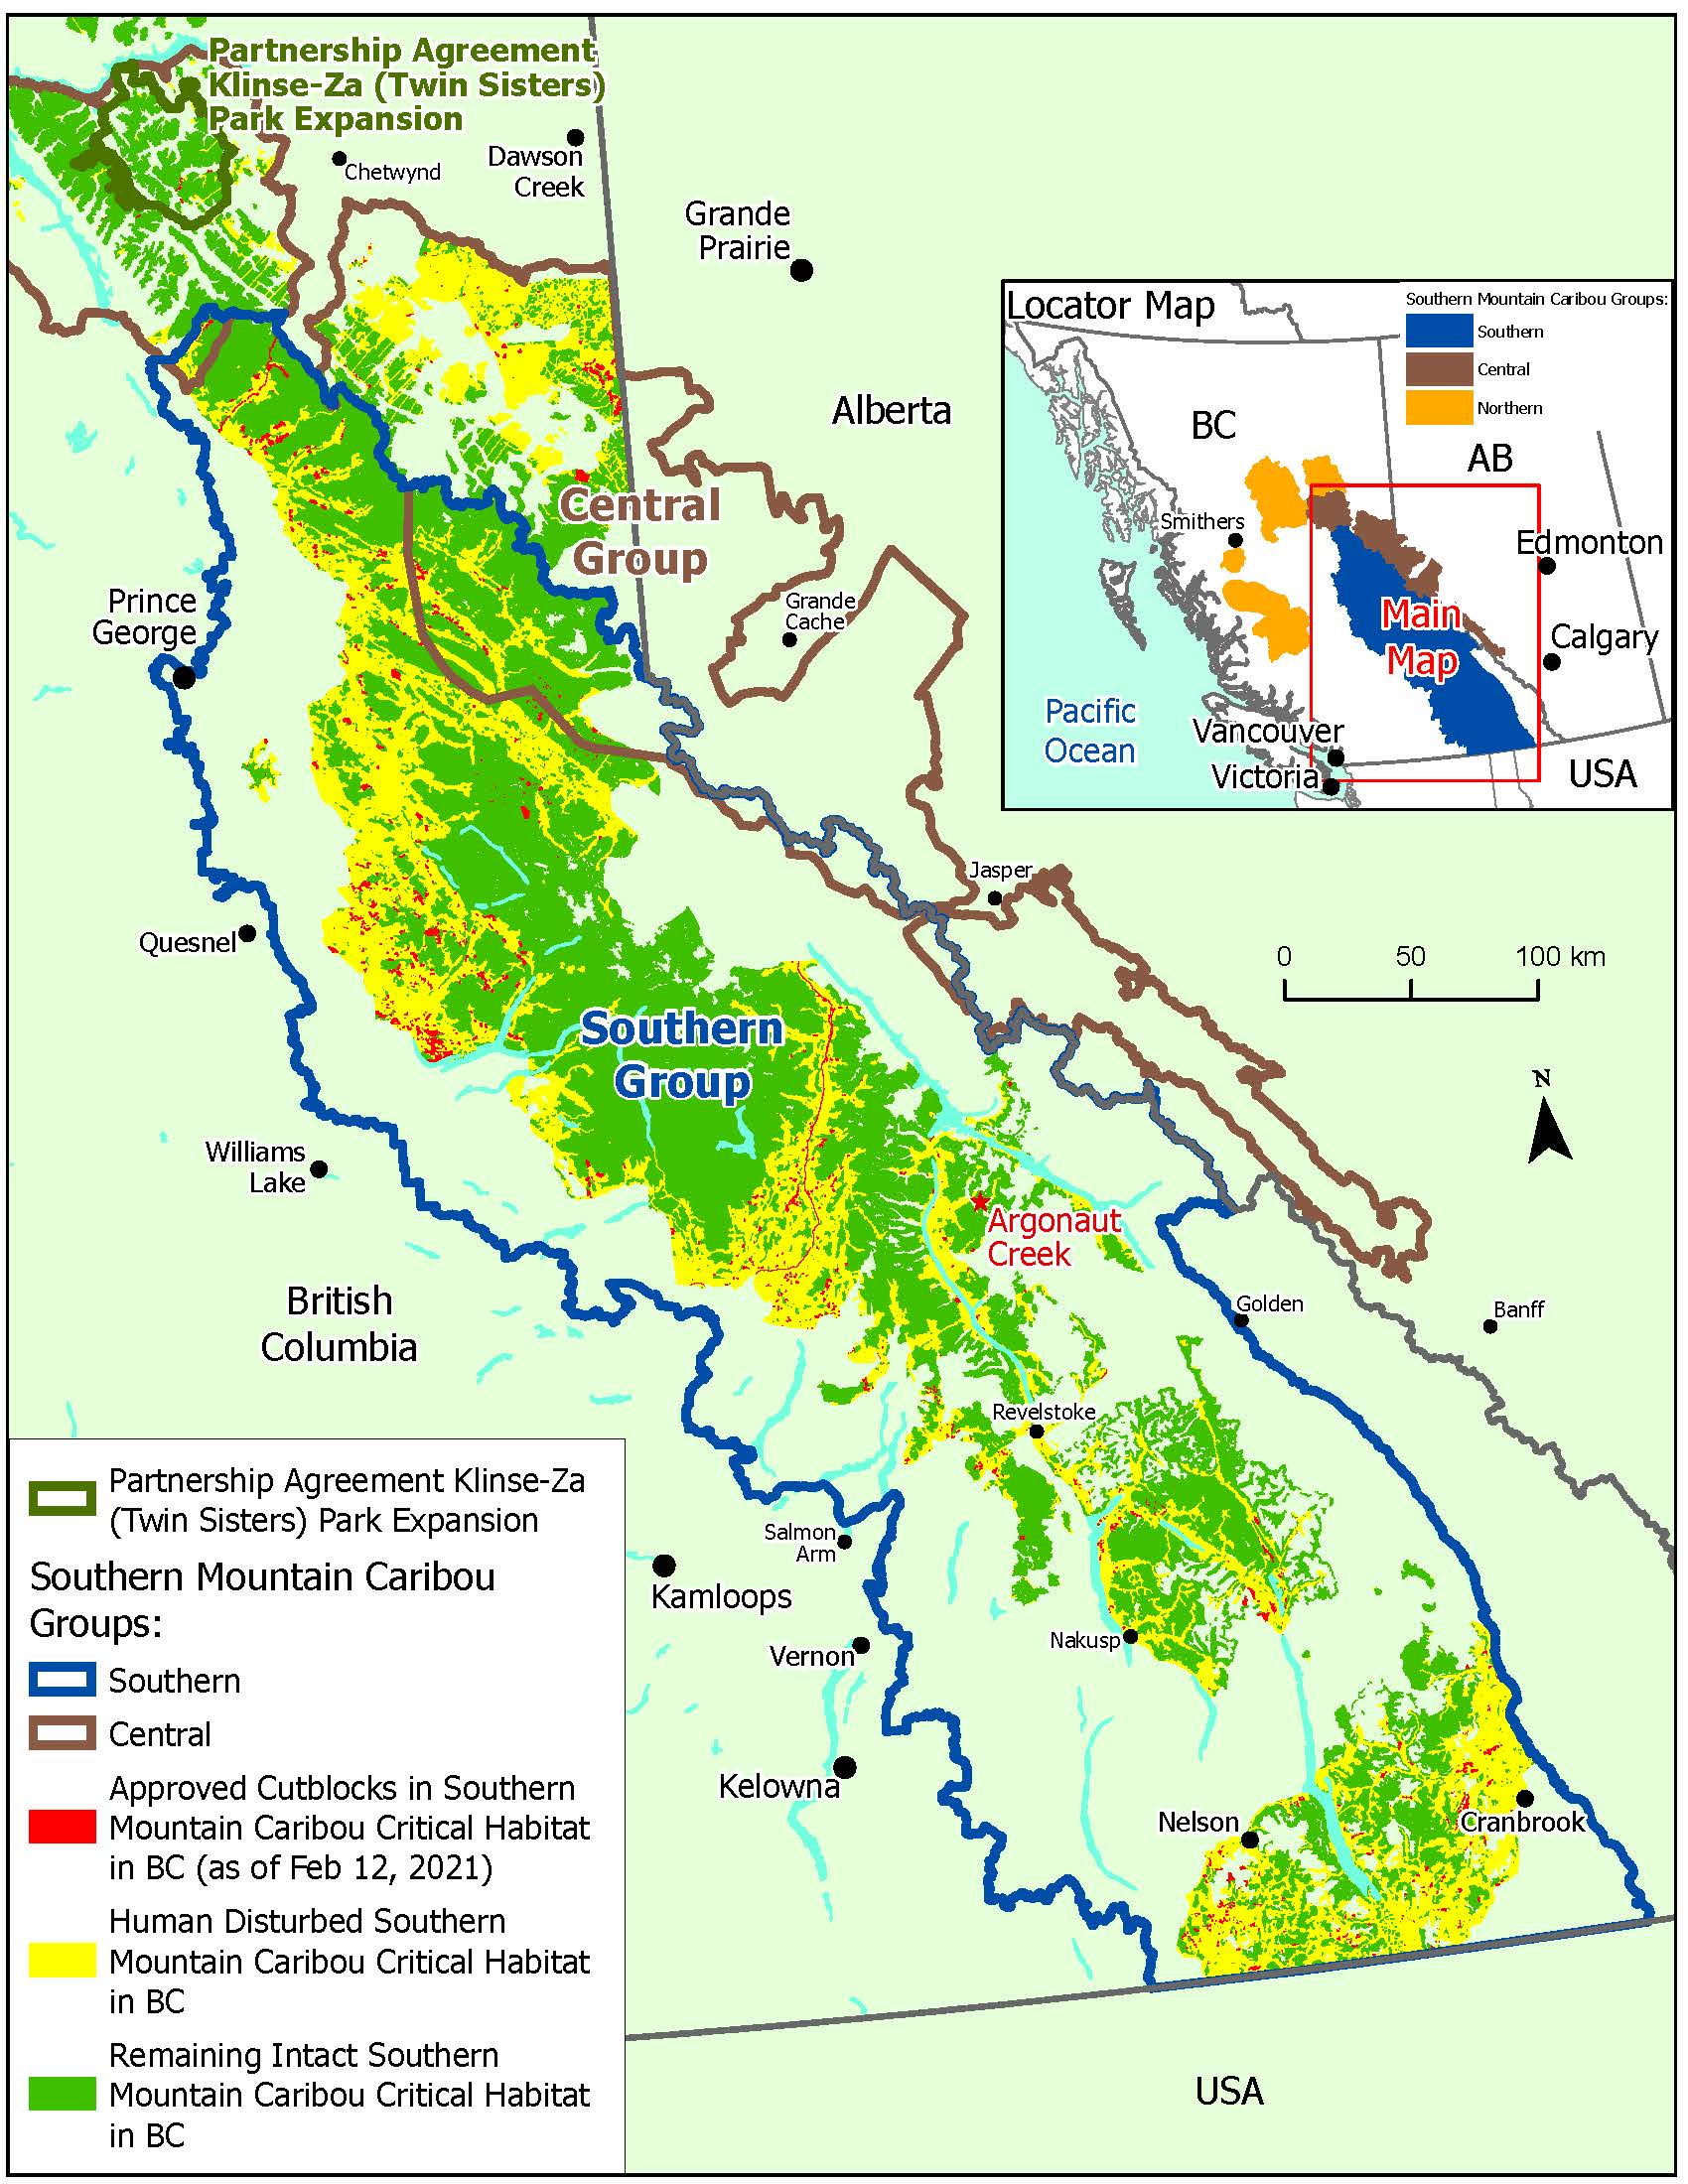 Map of Southern Mountain Caribou Critical Habitat and Human Disturbance